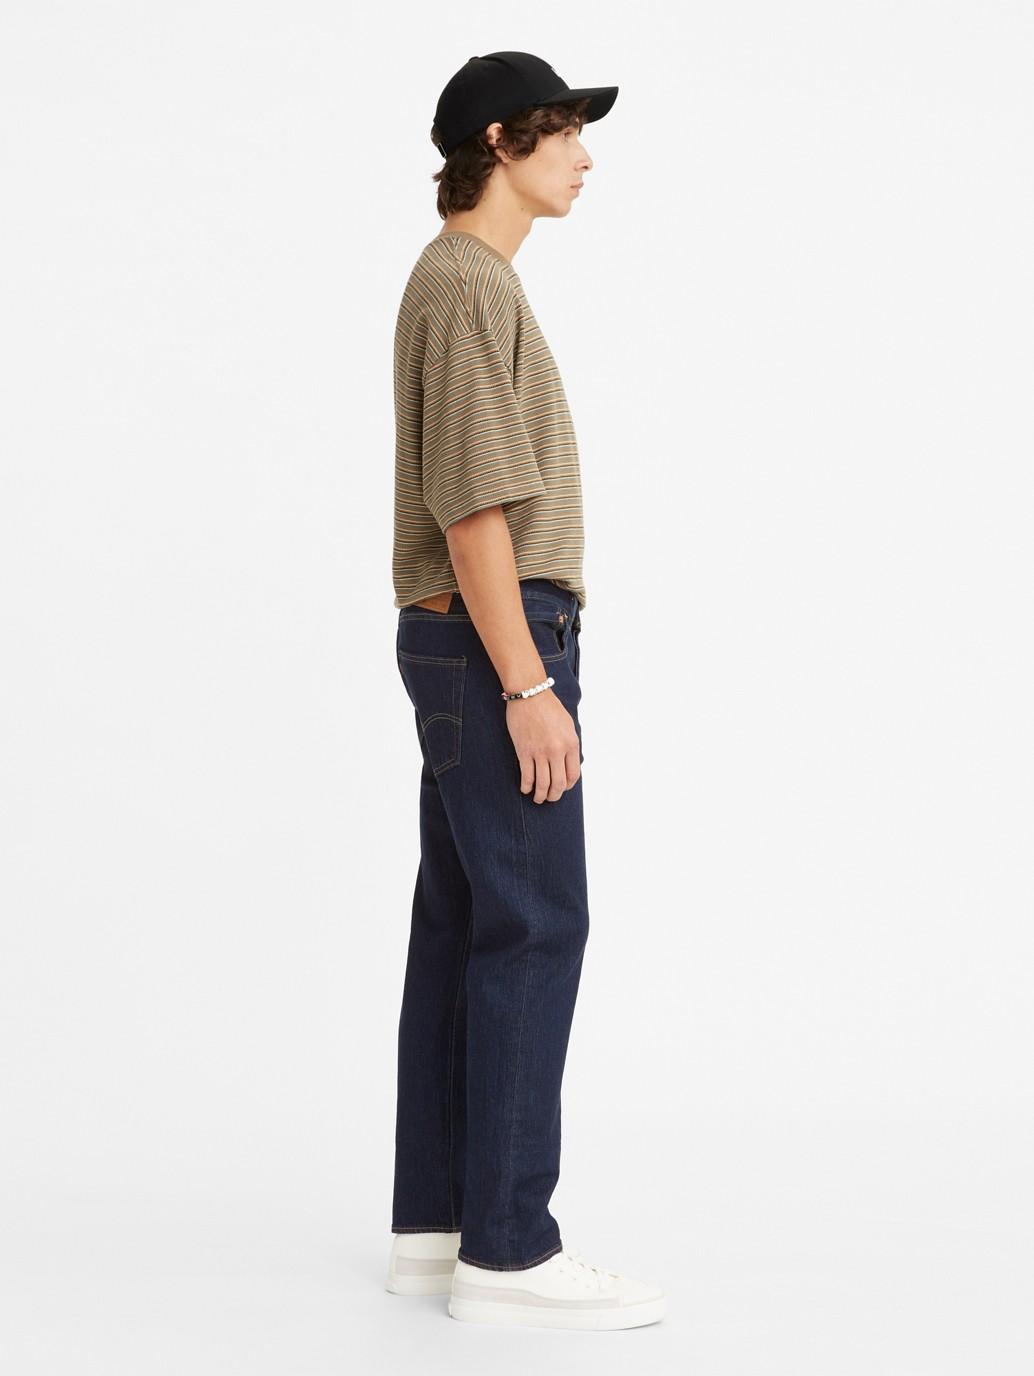 Buy Levi's® Men's 501® Slim Taper Jeans| Levi’s Official Online Store PH